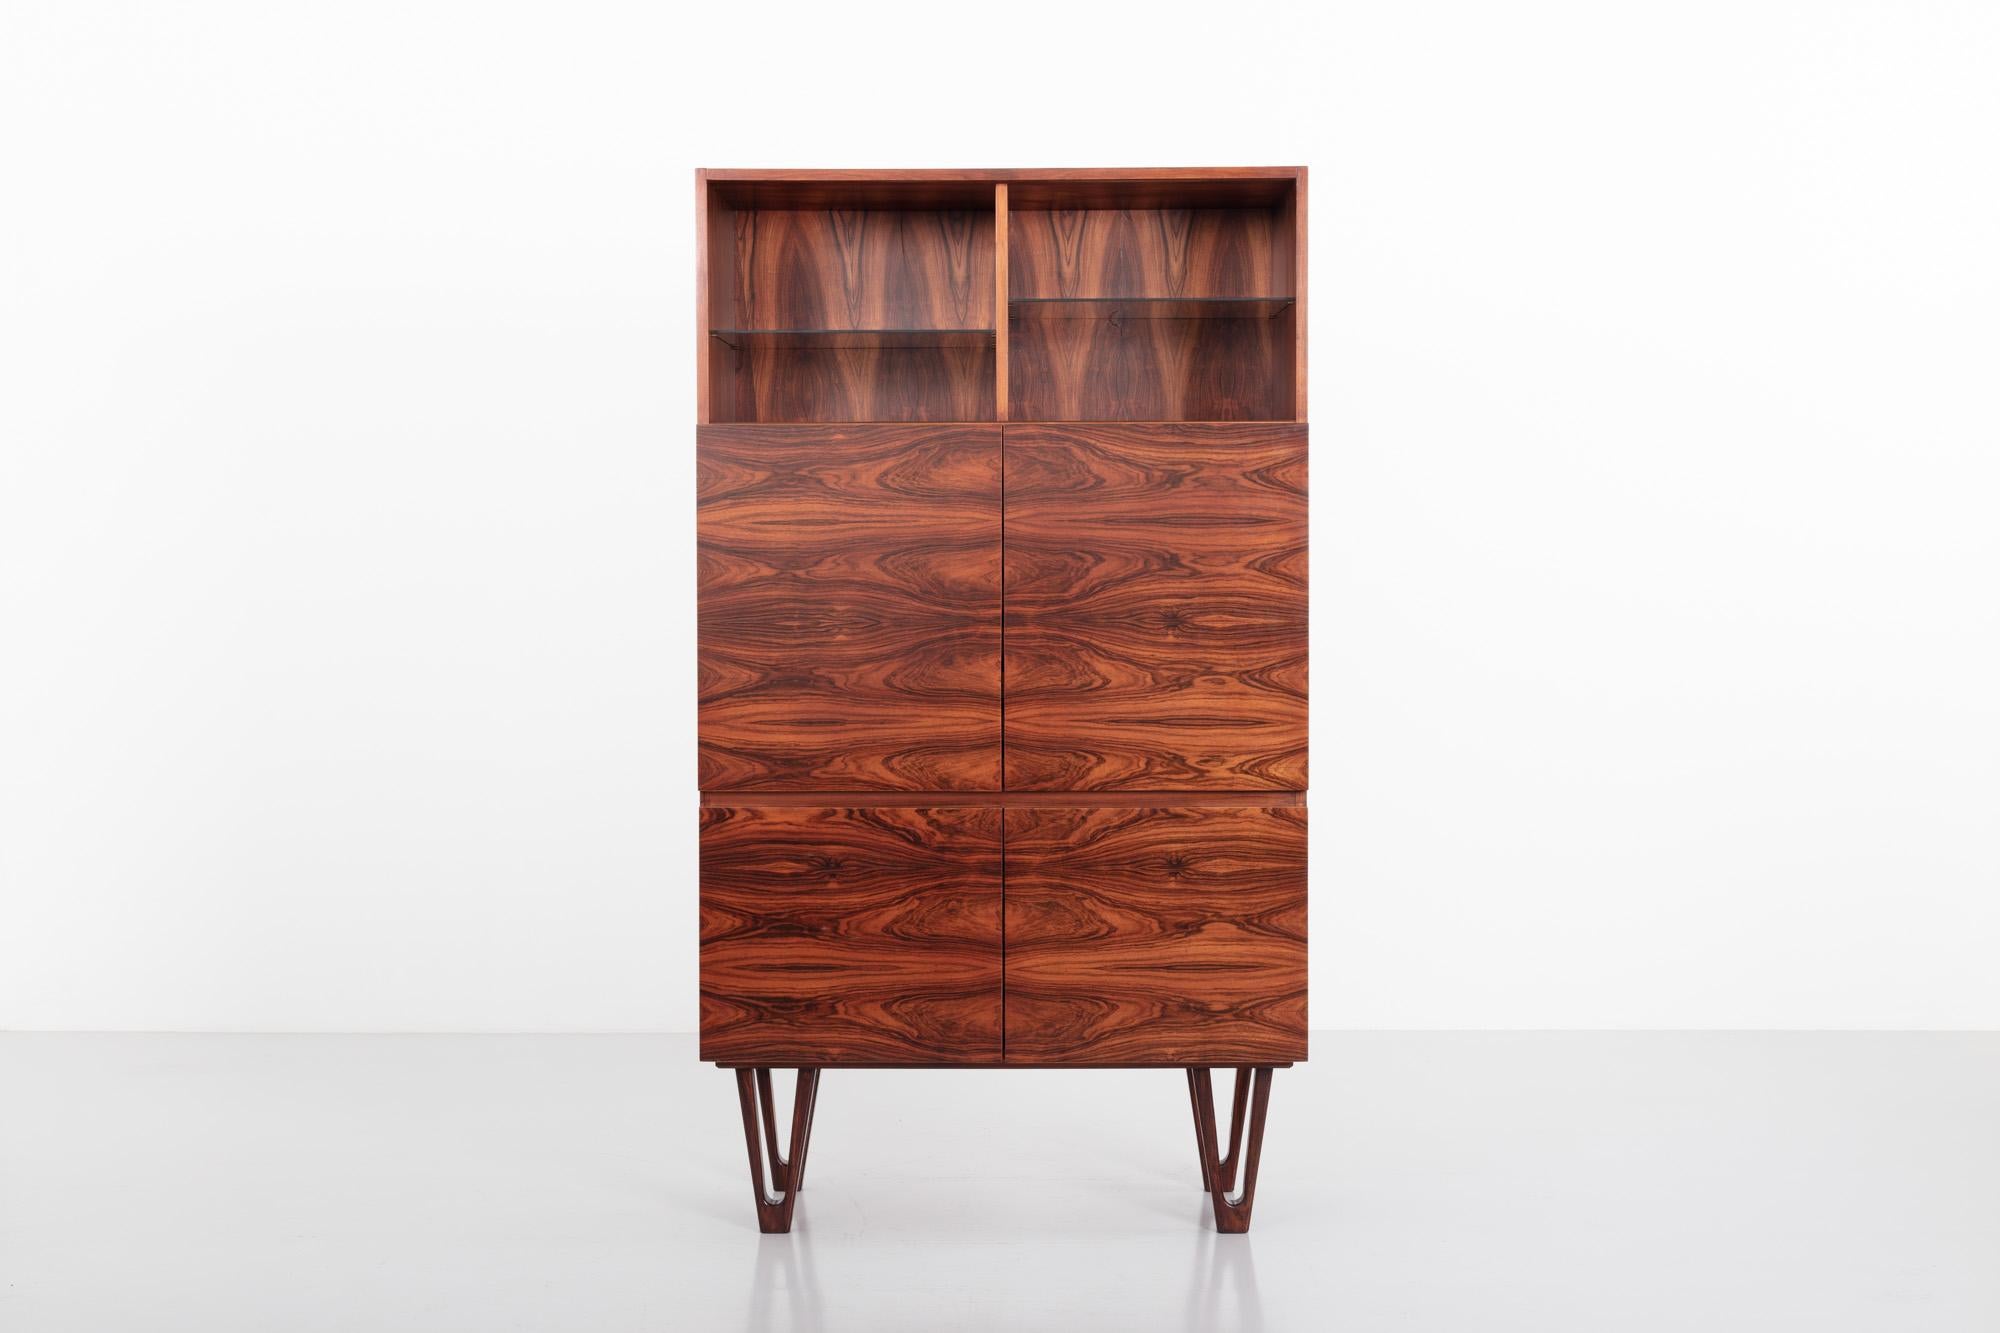 Scandinavian Modern Rosewood Trol Cabinet by Ib Kofod-Larsen for Seffle Möbelfabrik, Sweden, 1950s For Sale